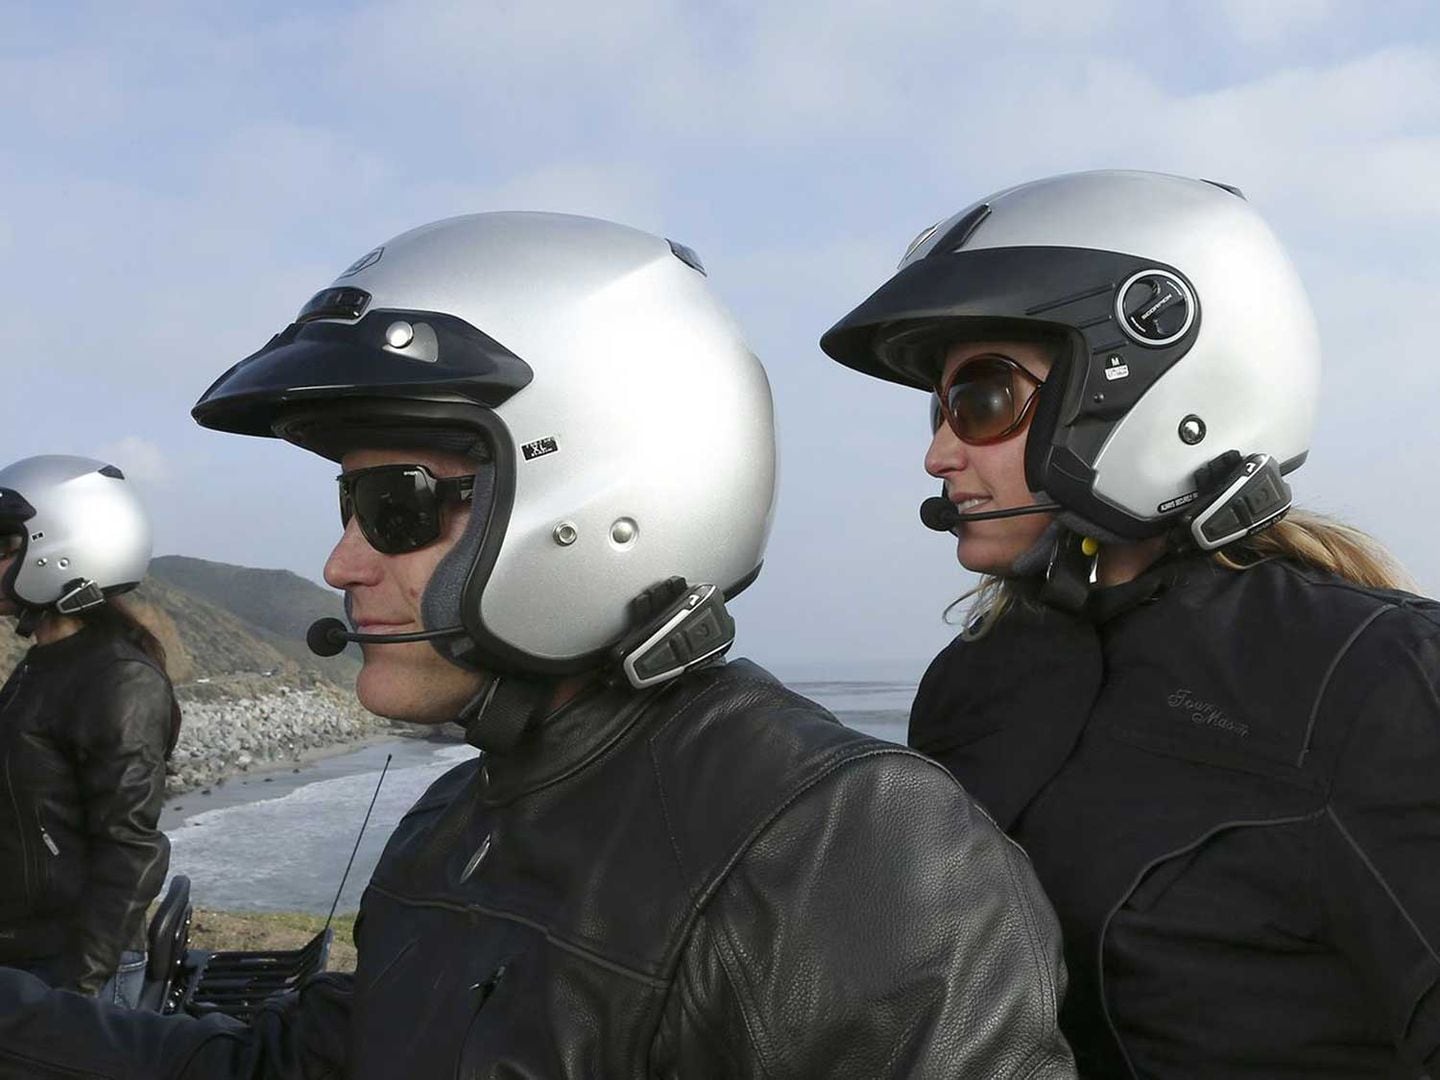 5 Best Budget Motorcycle Bluetooth Helmet Intercom On Fodsports 2023